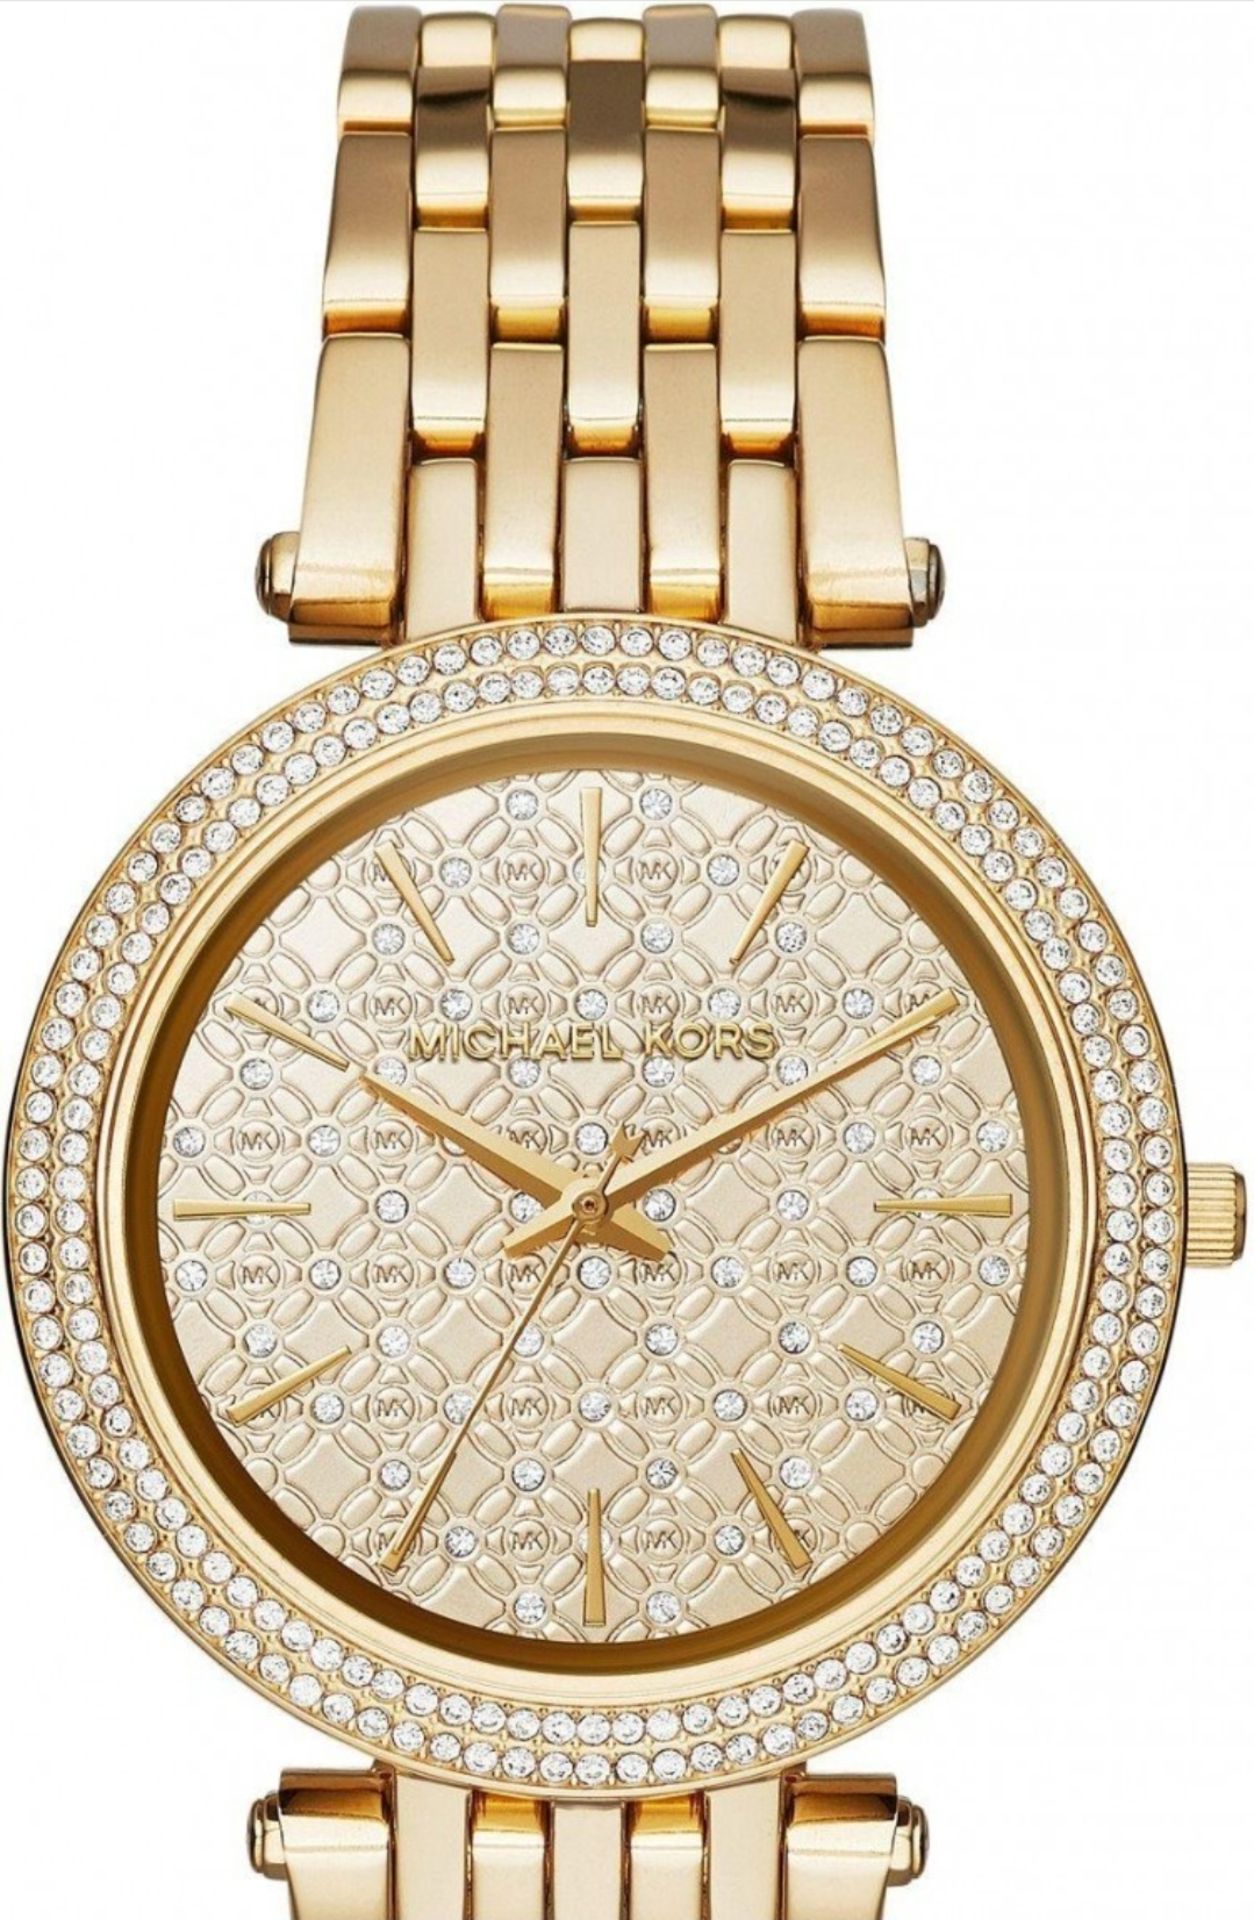 Michael Kors MK3398 Darci Gold Tone Stainless Steel Ladies Watch - Image 4 of 7